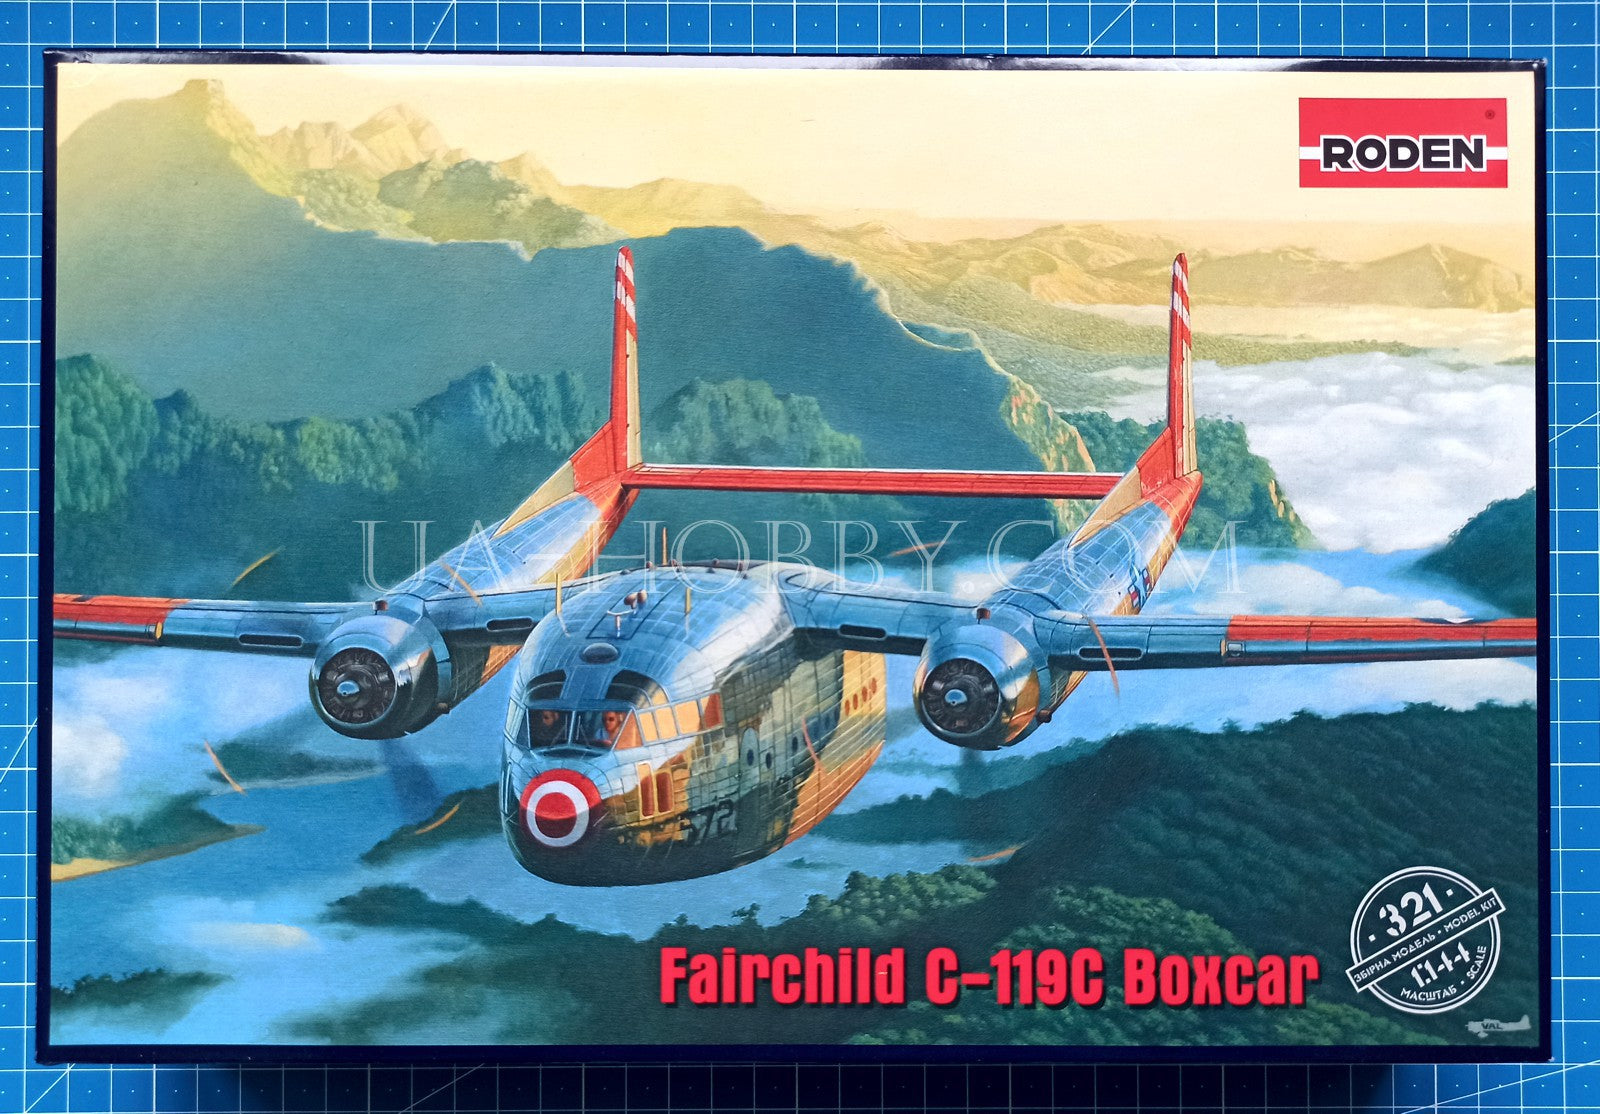 1/144 Fairchild C-119C Boxcar. Roden 321